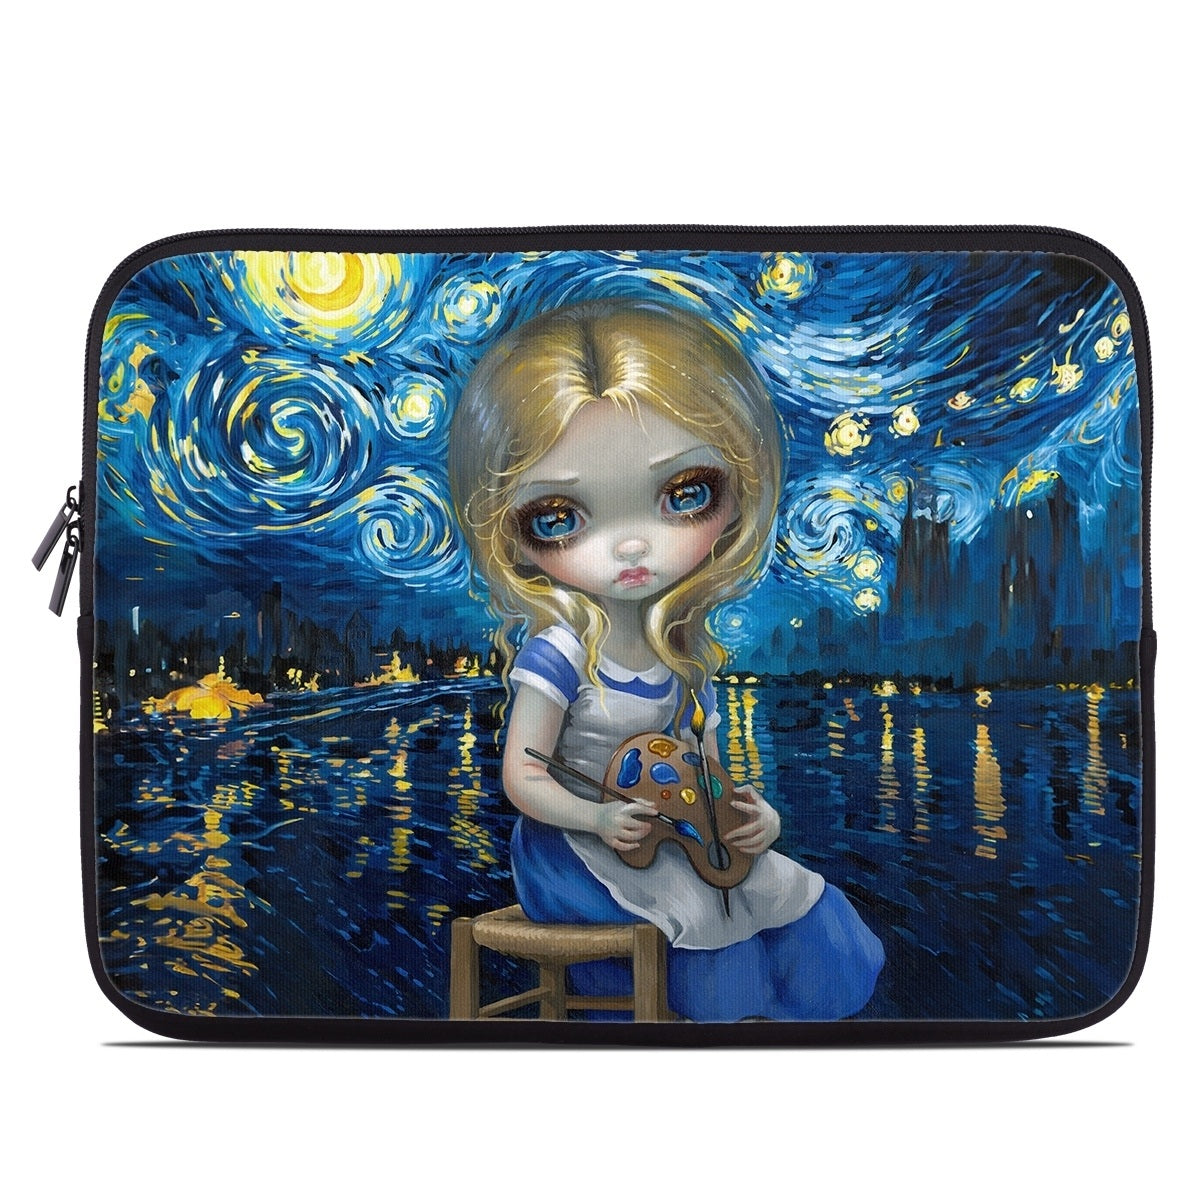 Alice in a Van Gogh - Laptop Sleeve